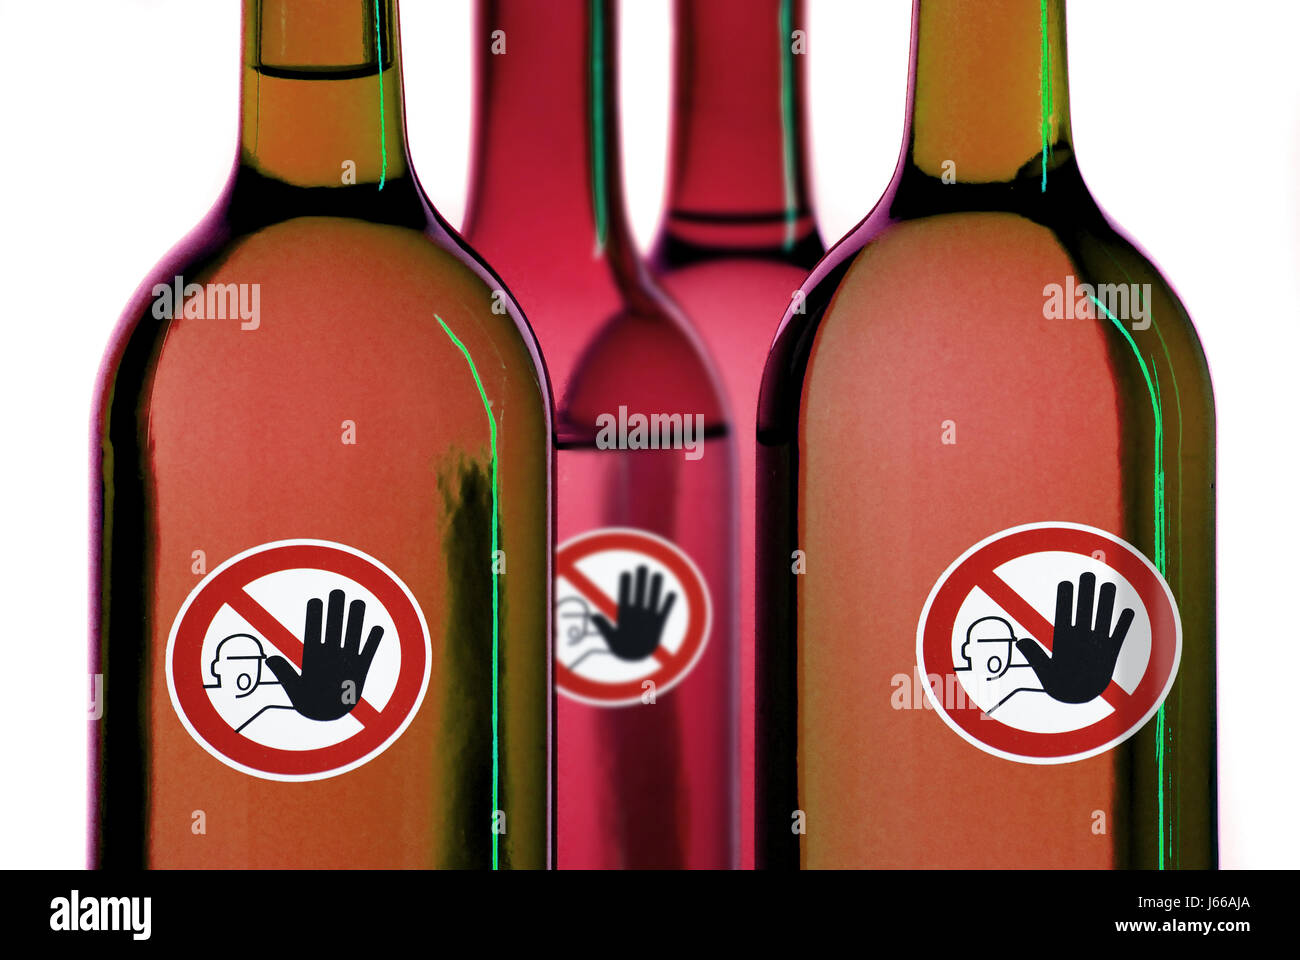 drink drinking bibs alcohol caution addiction addicted warning alcoholism sign Stock Photo